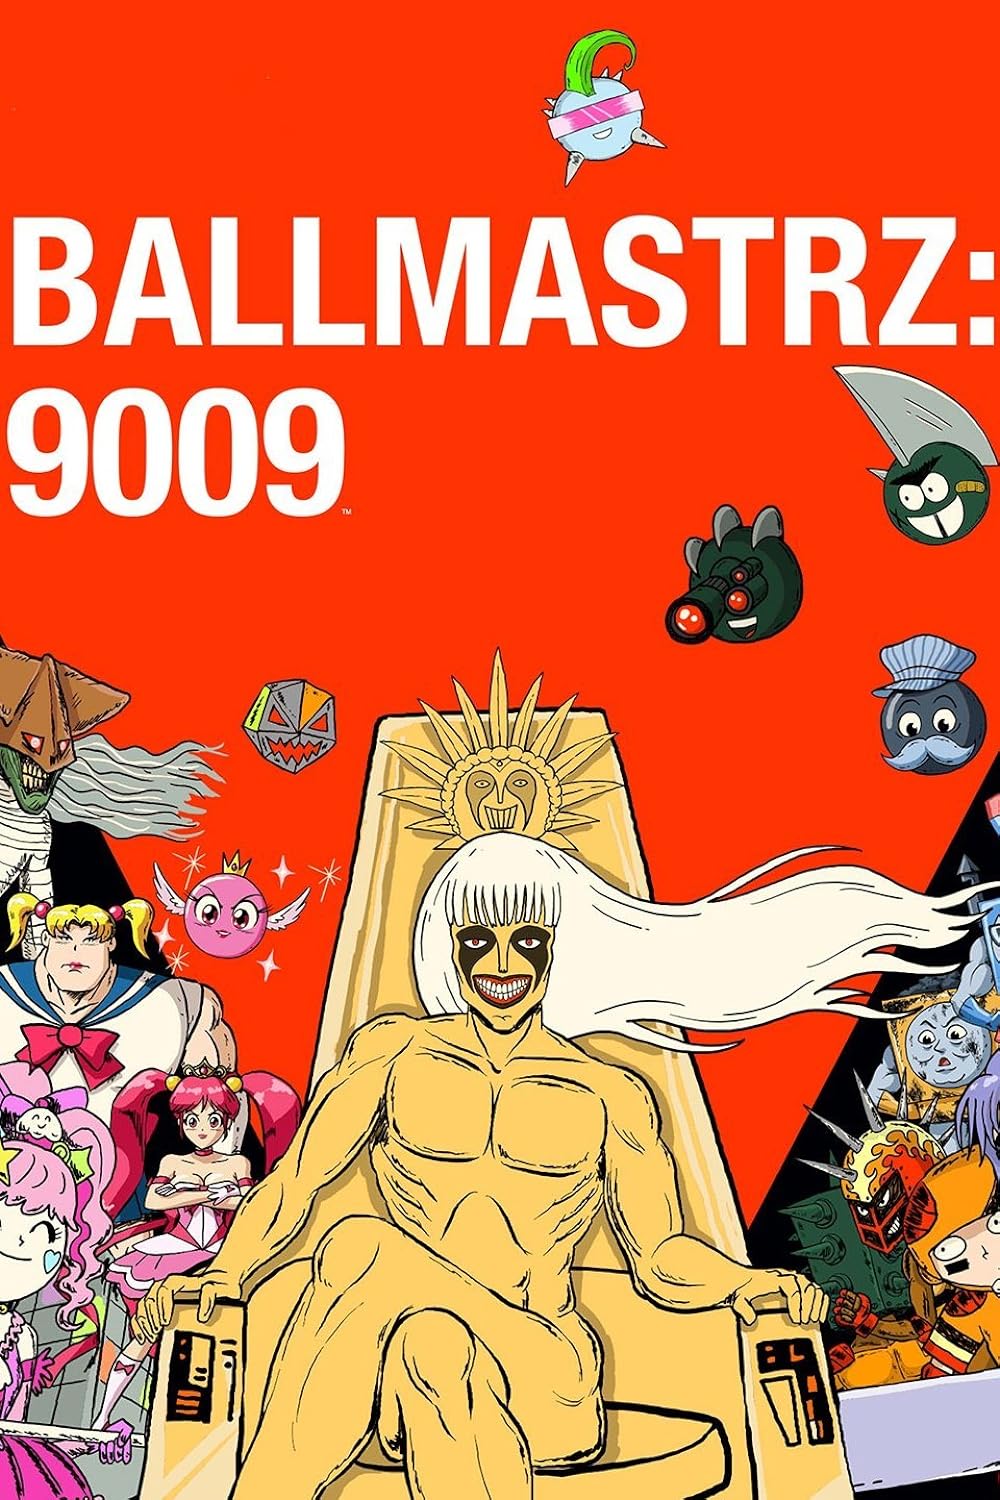 Ballmastrz 9009